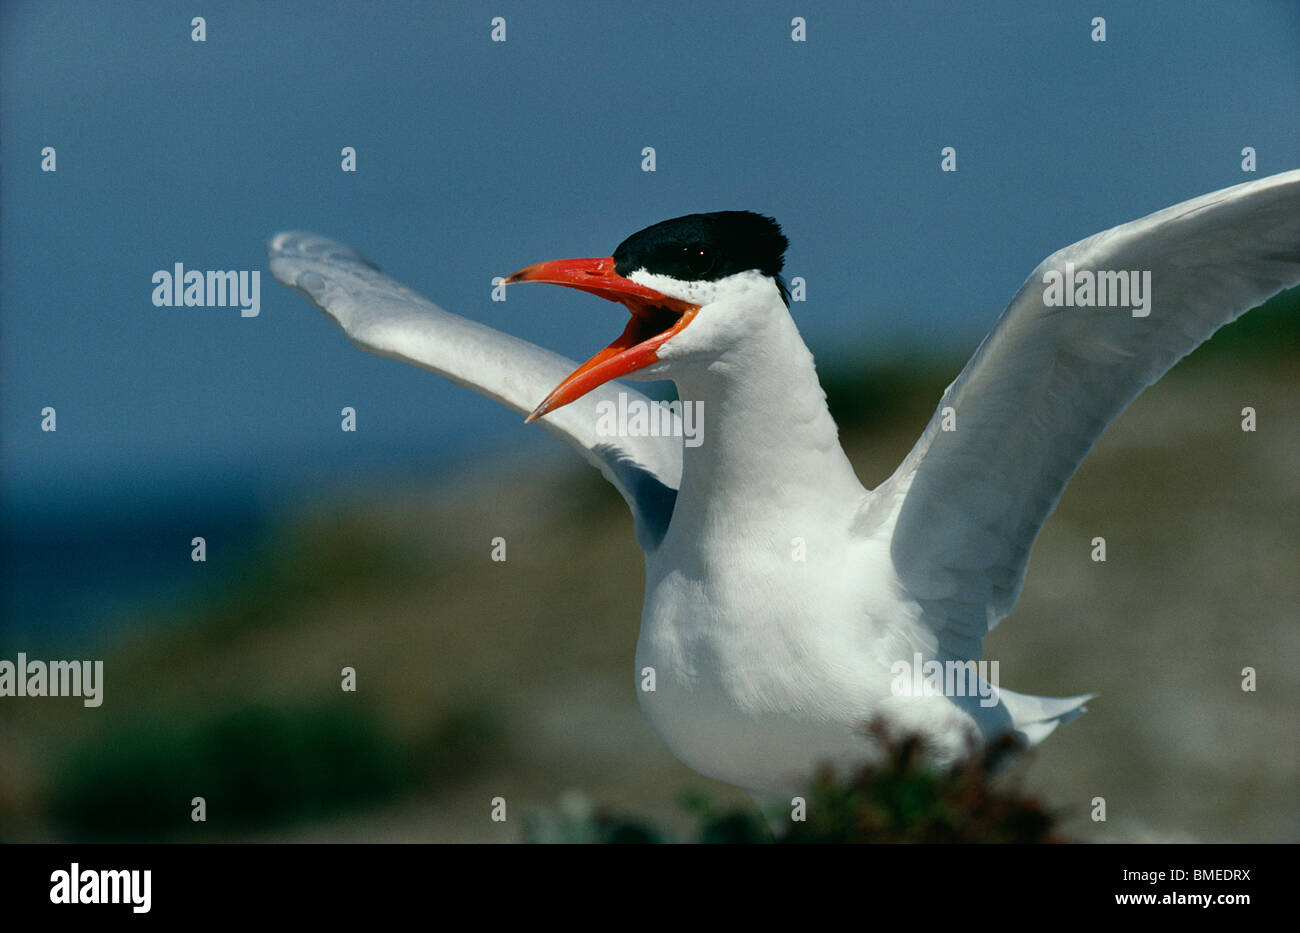 Caspian tern bird flapping Stock Photo